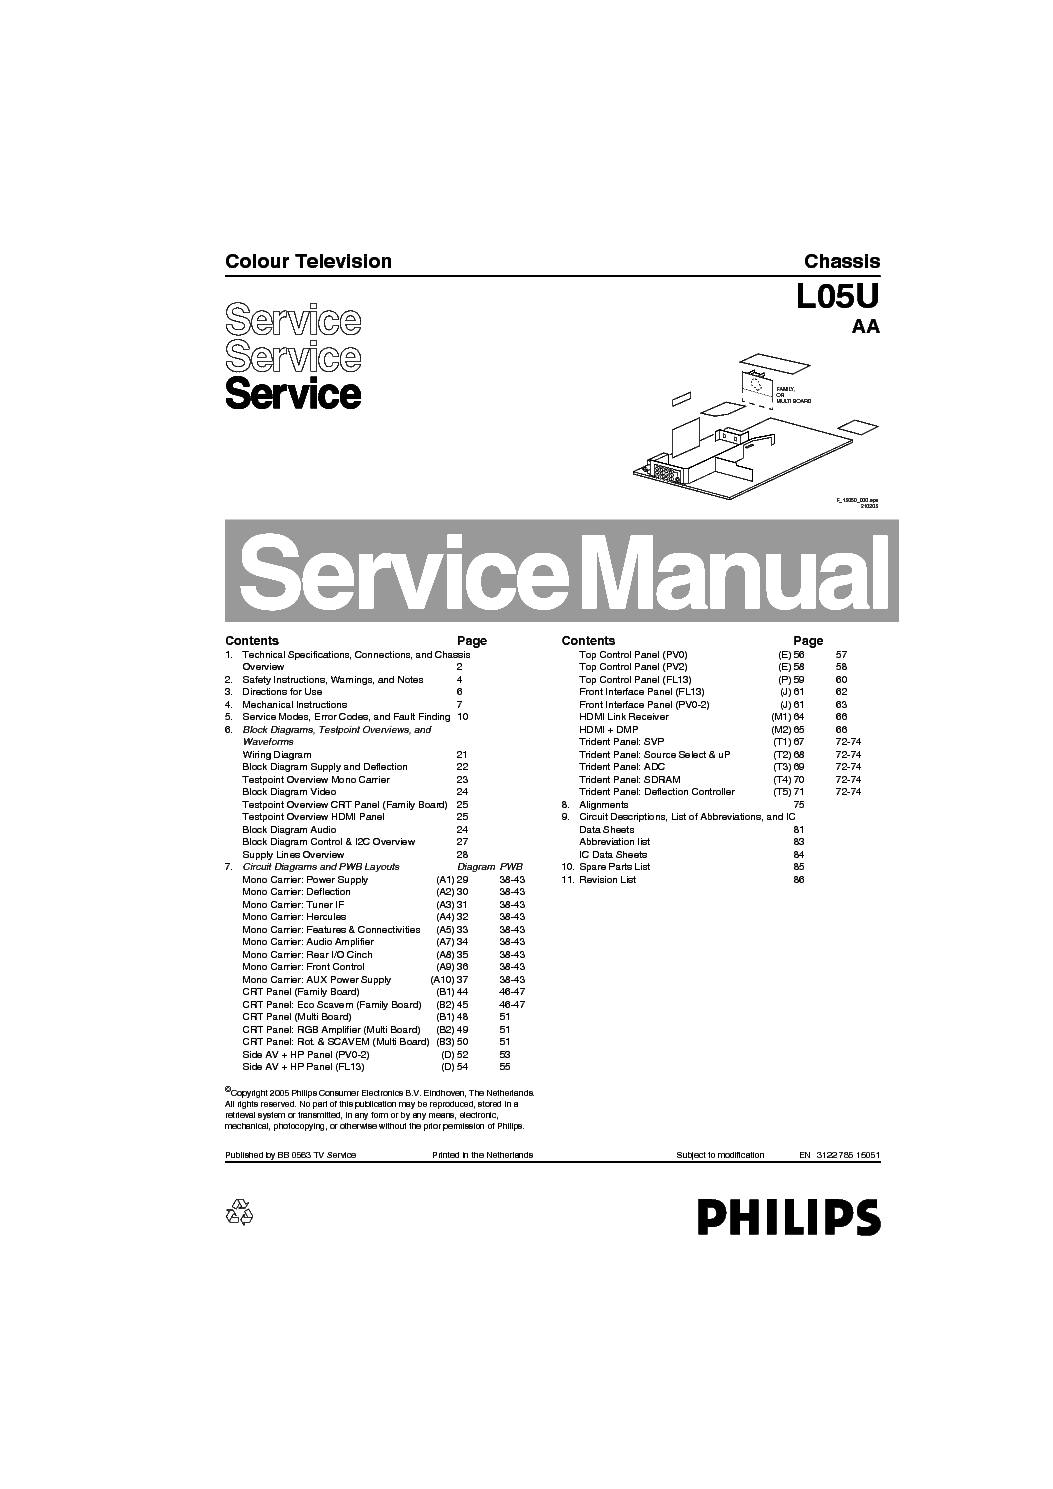 Service manual philips. Philips шасси QFU1.2E. G111s шасси Philips. Service manual Philips shb9100. Philips l9 2e.